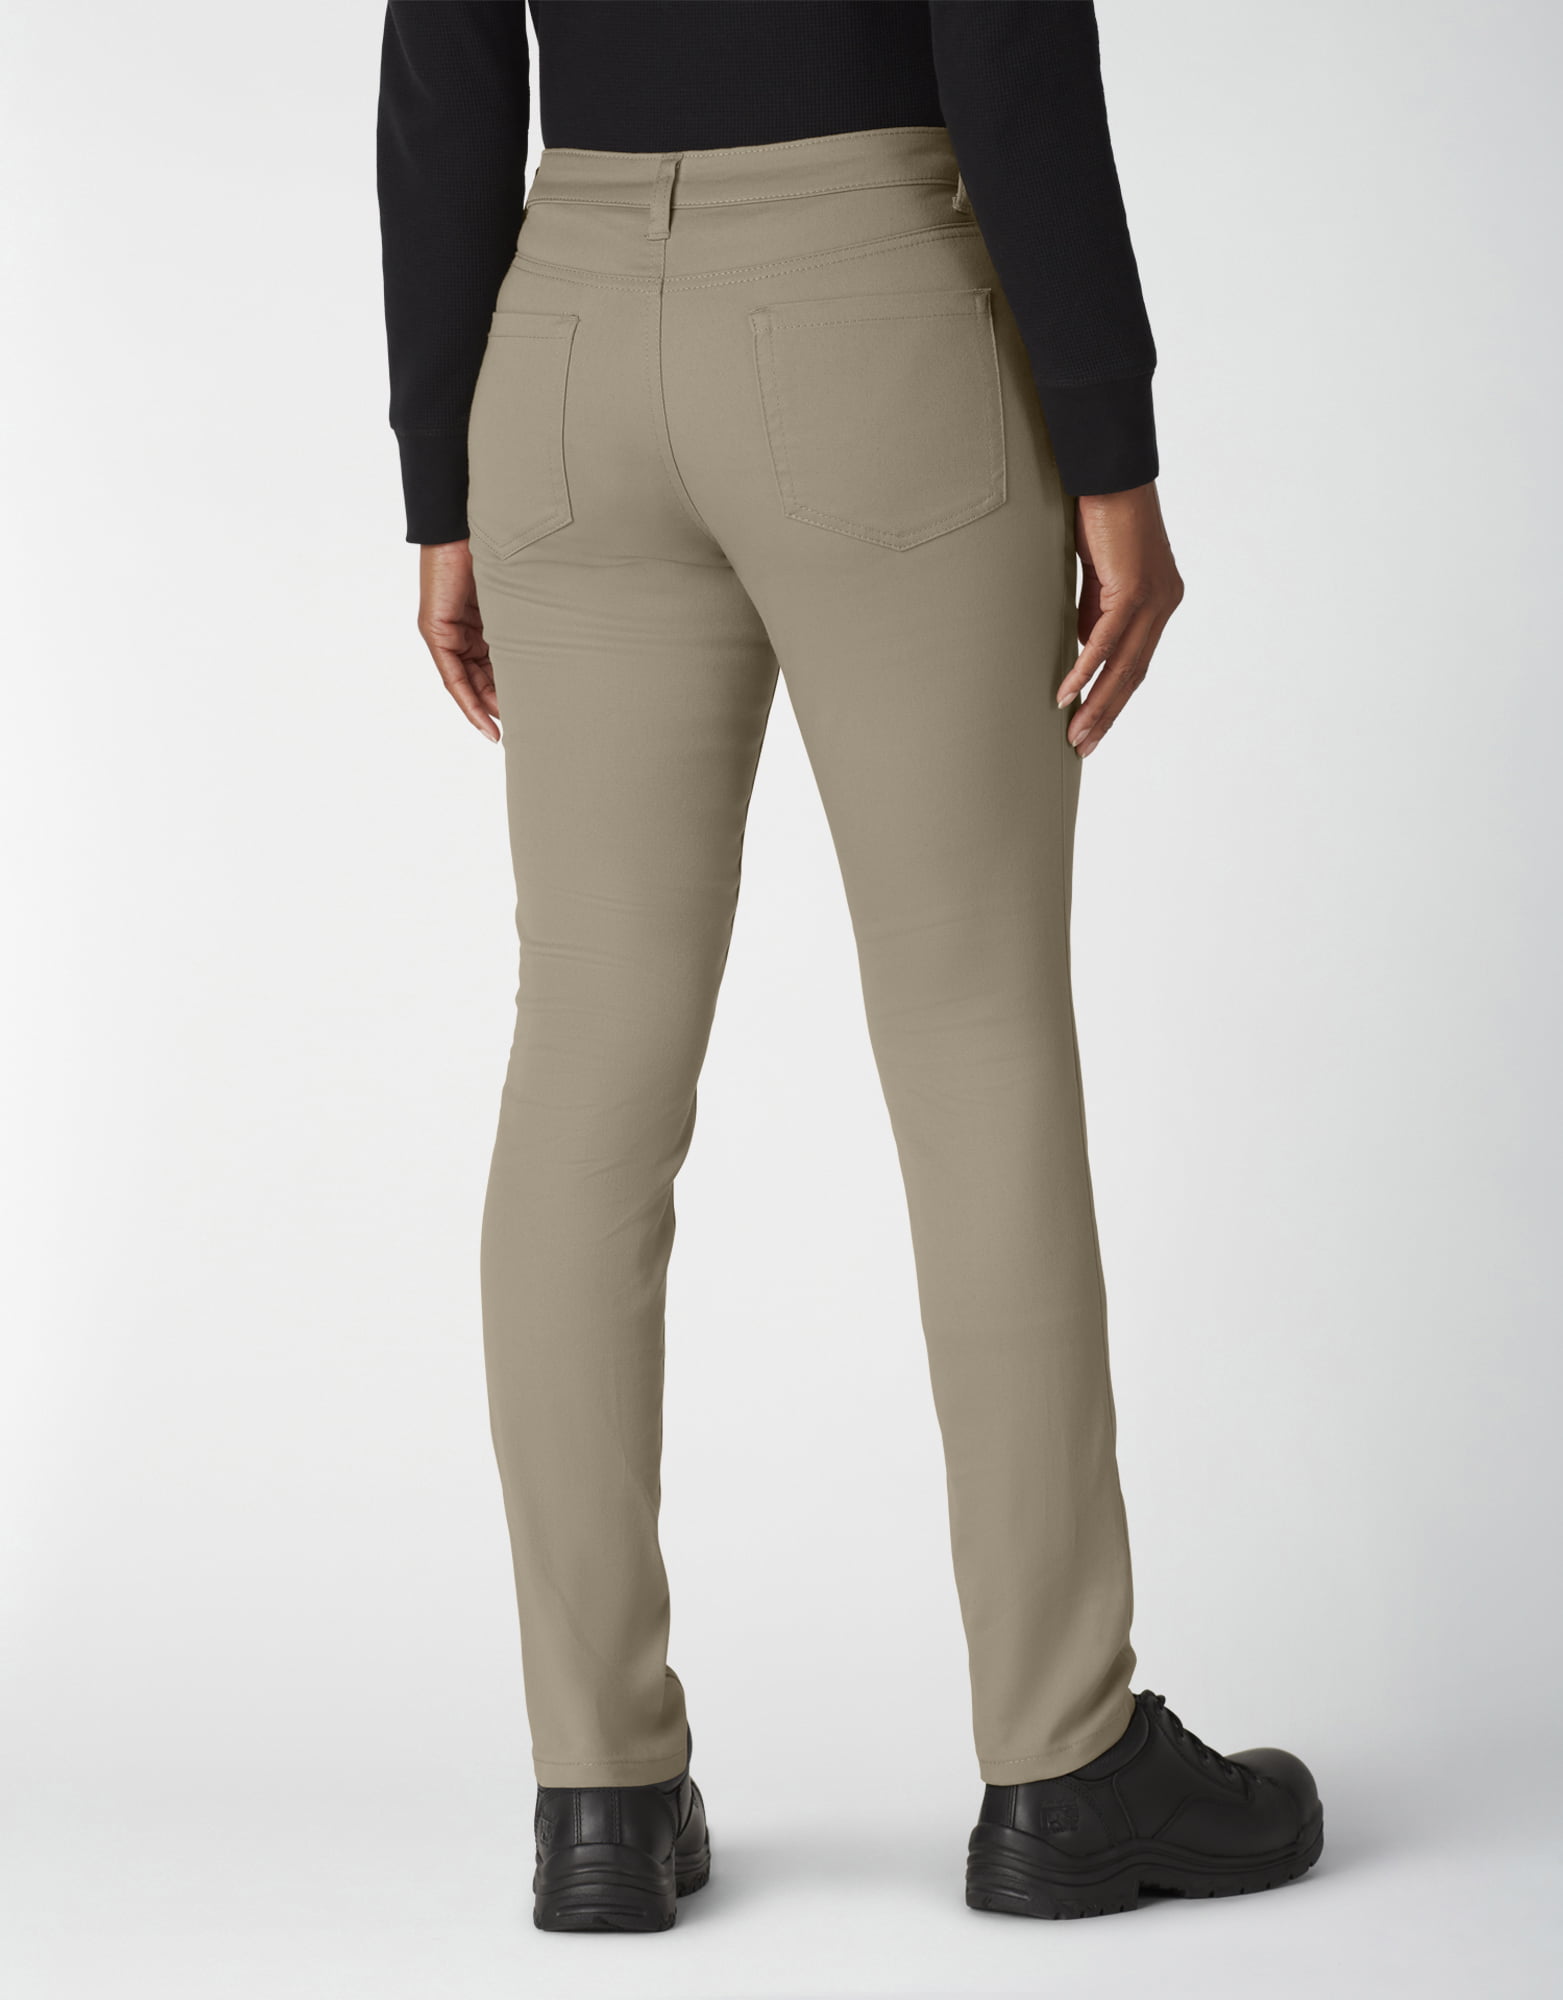 Genuine Dickies Women's Stretch Twill Skinny Service Pant - Walmart.com